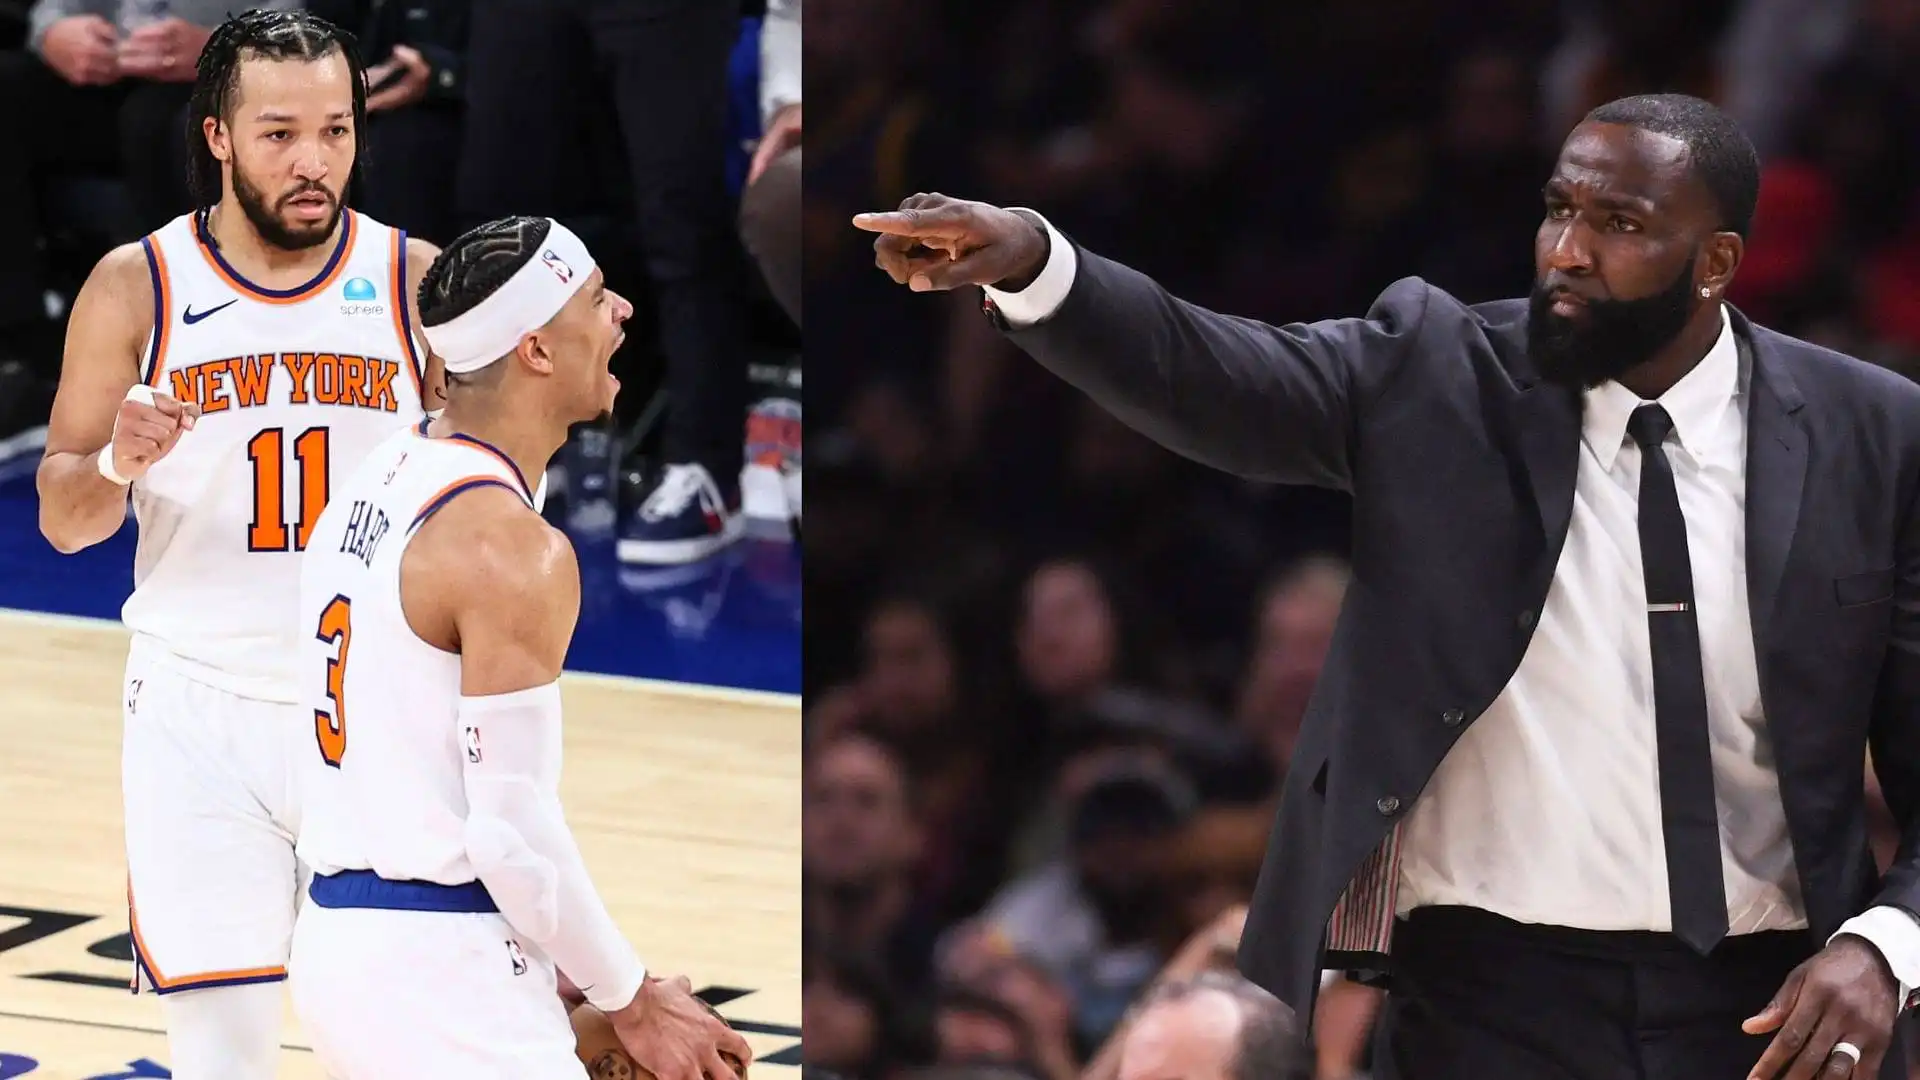 Kendrick Perkins praises culture as Knicks lose Game 3 - The SportsRush